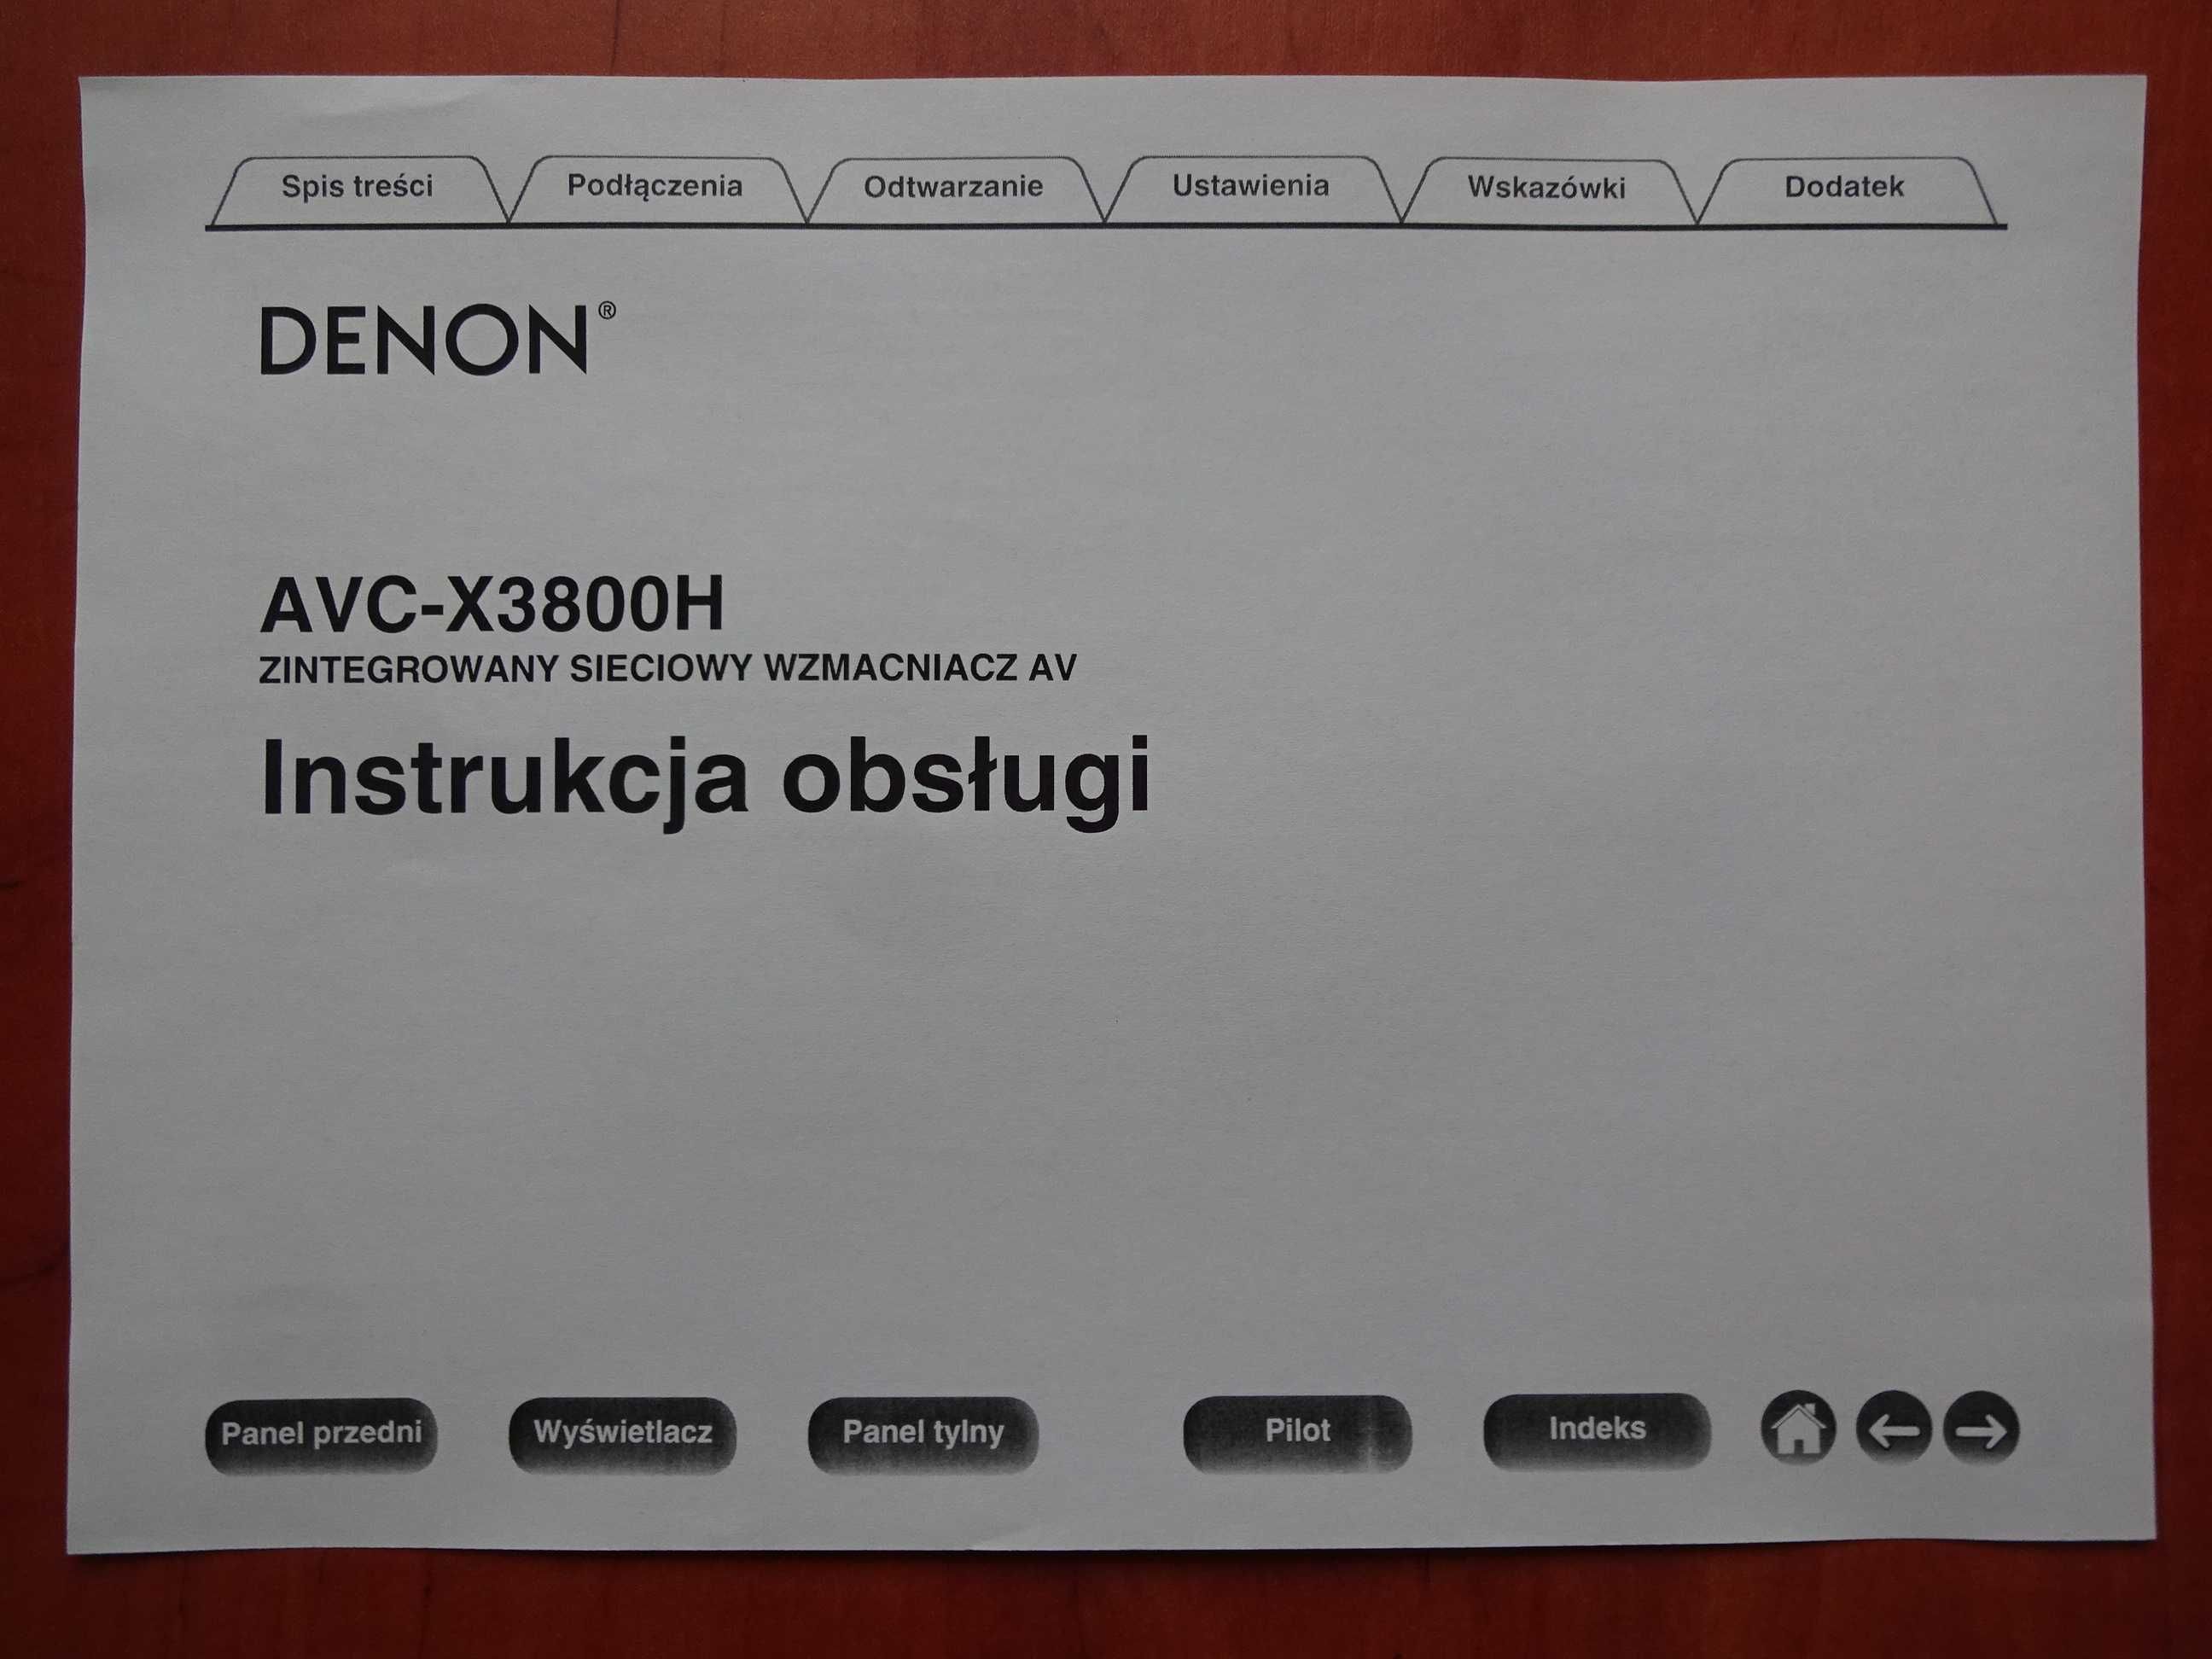 Instrukcja obsługi - Denon AVC-X3800H